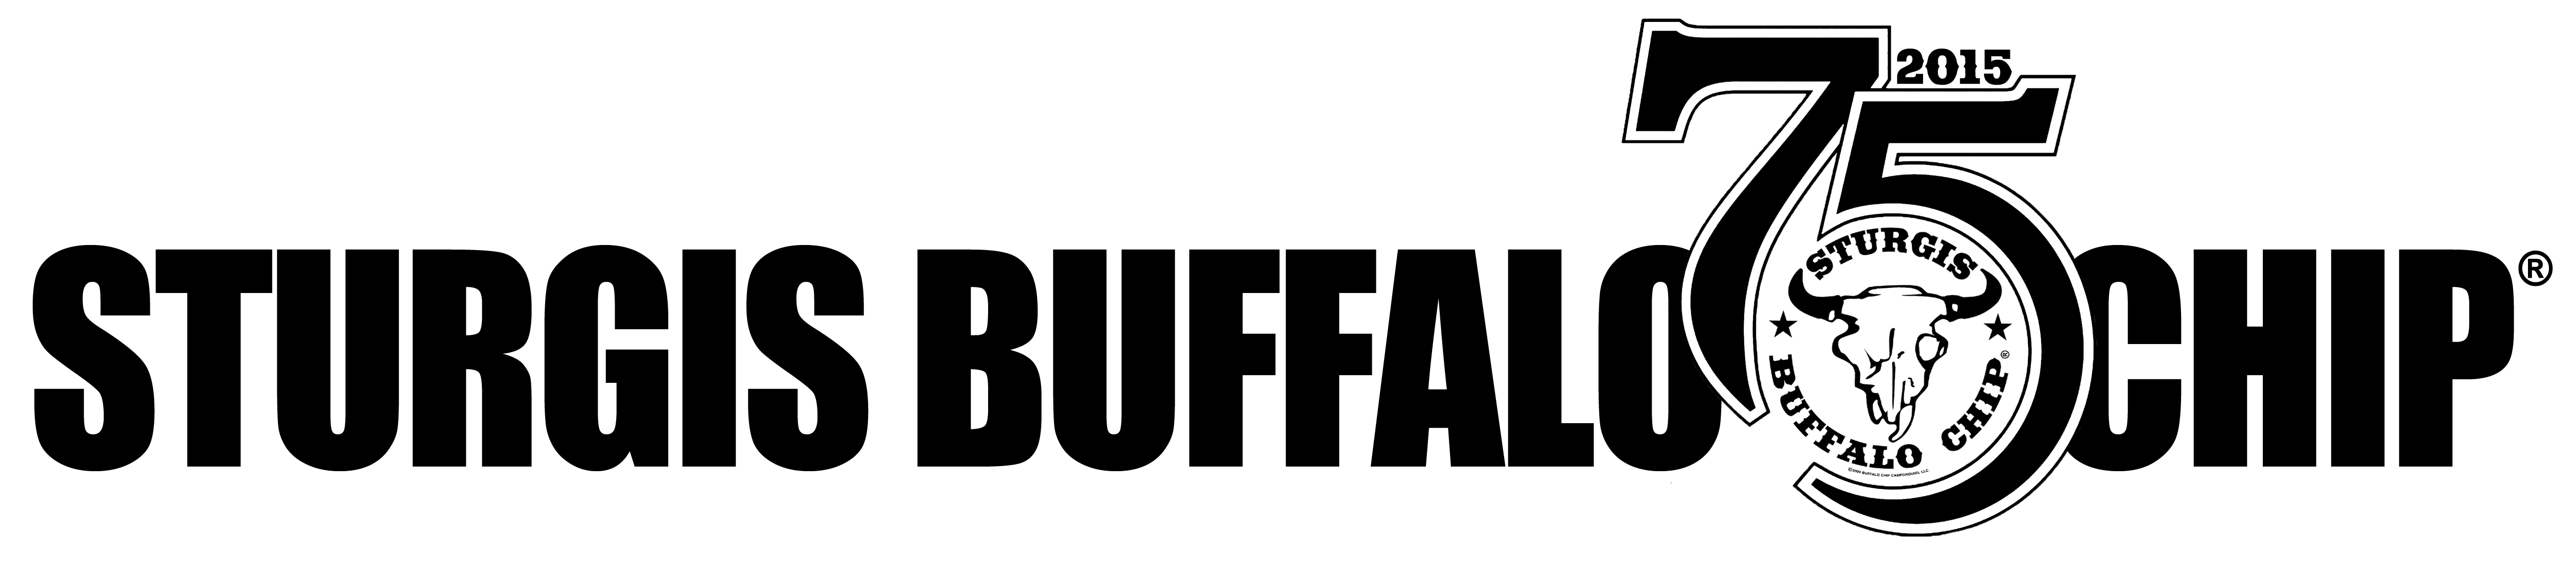 The Sturgis Buffalo Chip 2015